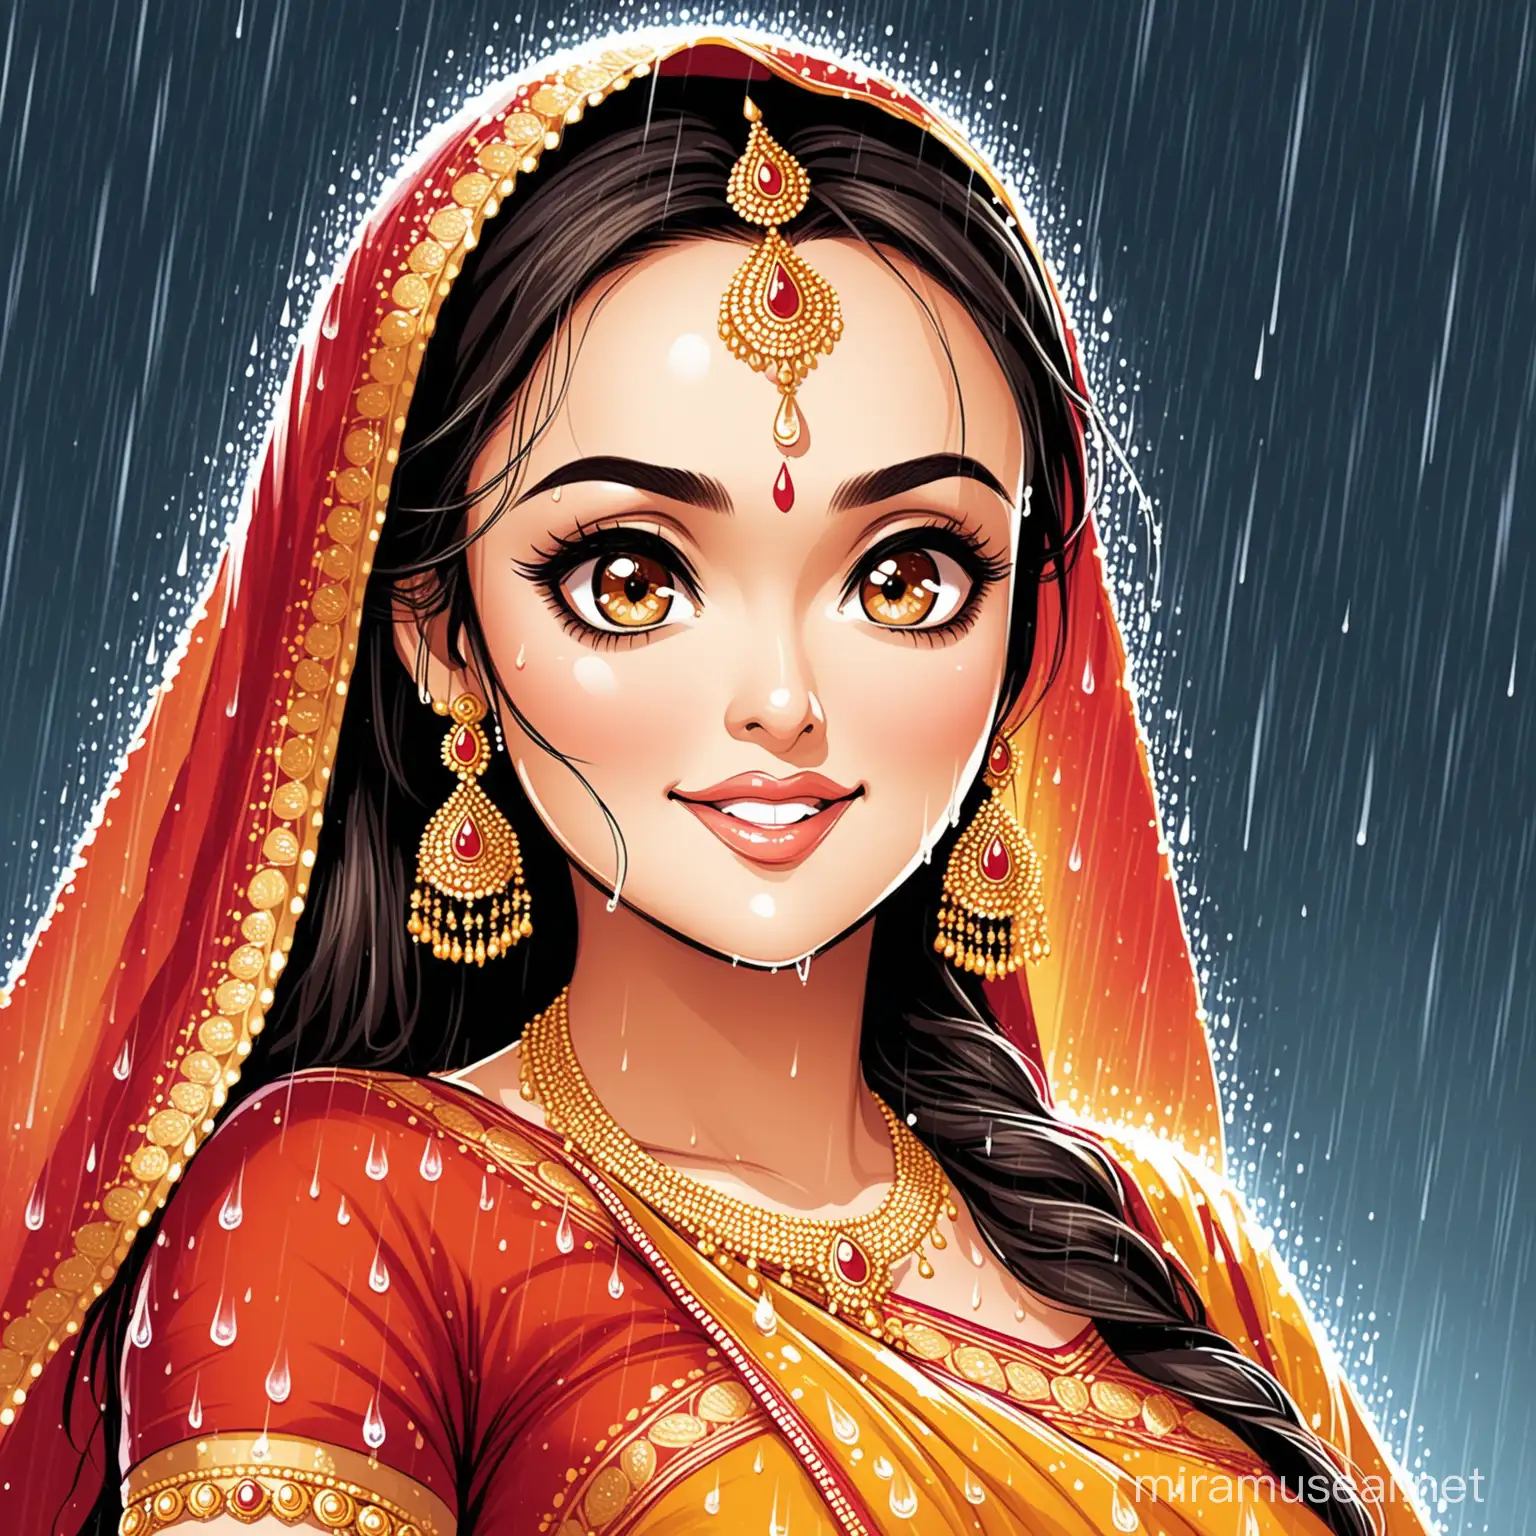 Preety Zinta wearing saree with big gold earing dancing in the rain.Caricatures.big head, long nose sexy lips big eyes